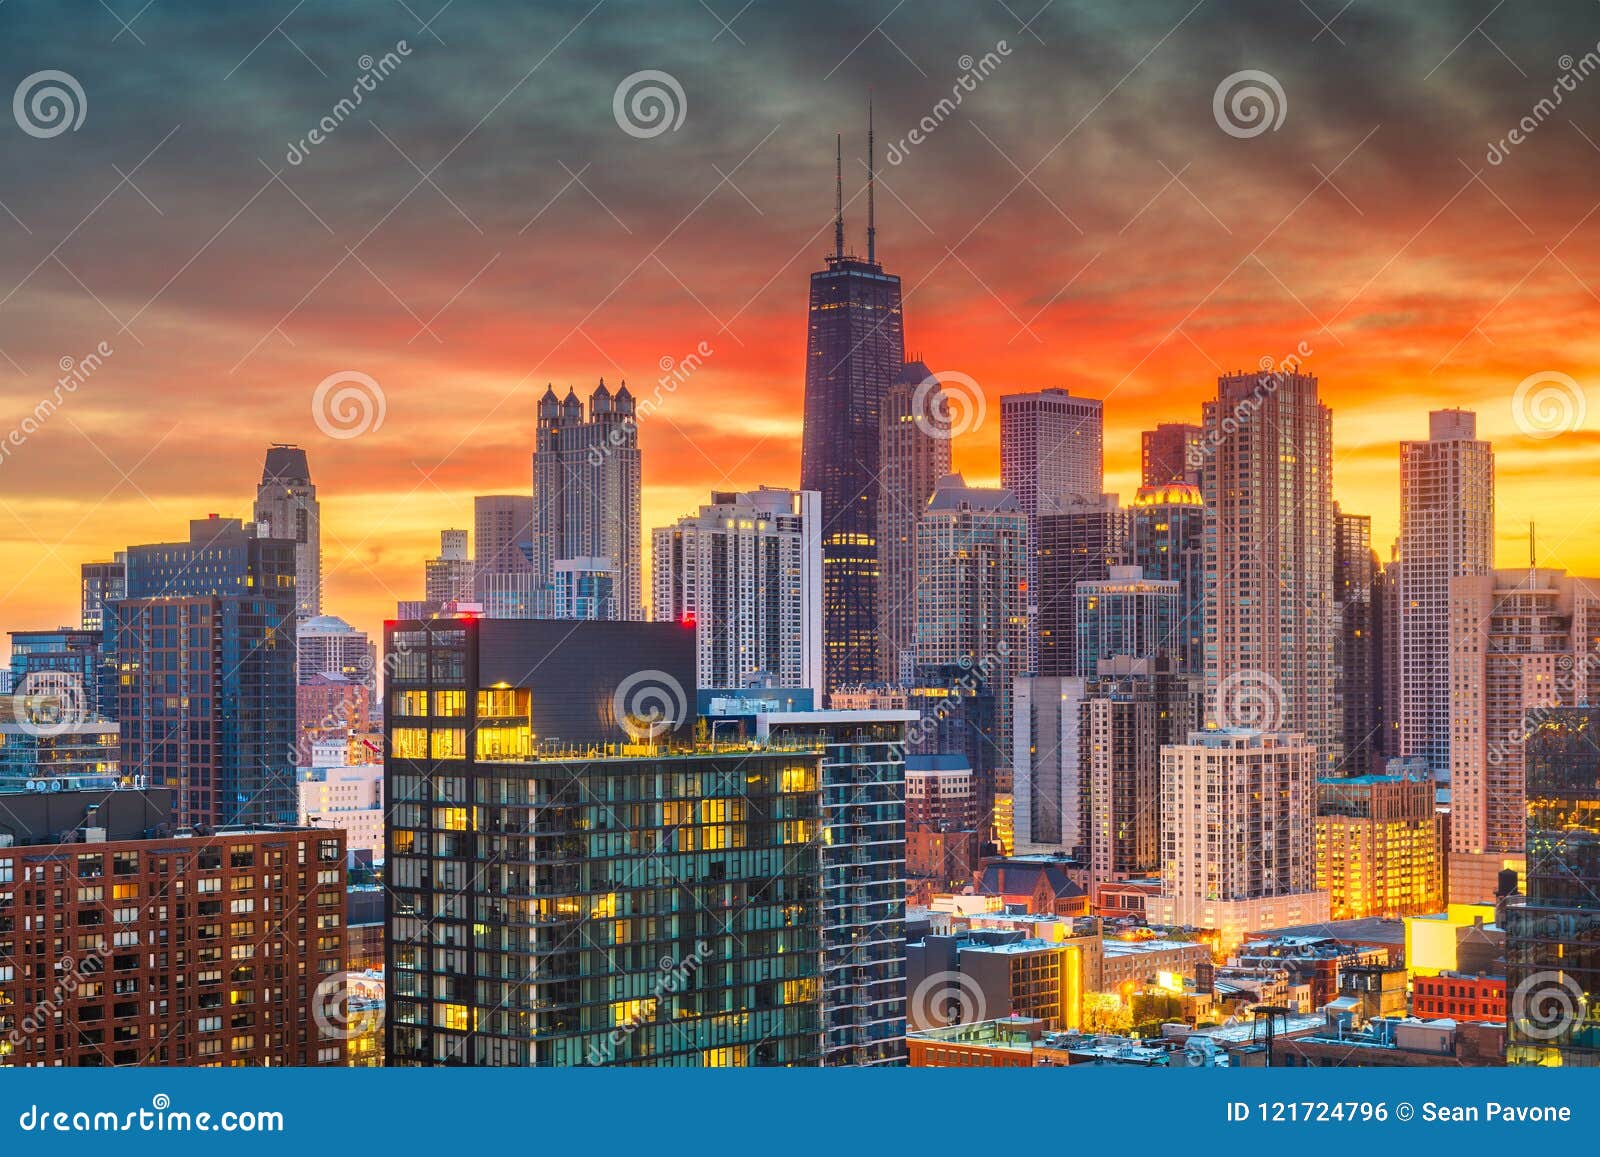 chicago, illinois, usa skyline at dusk